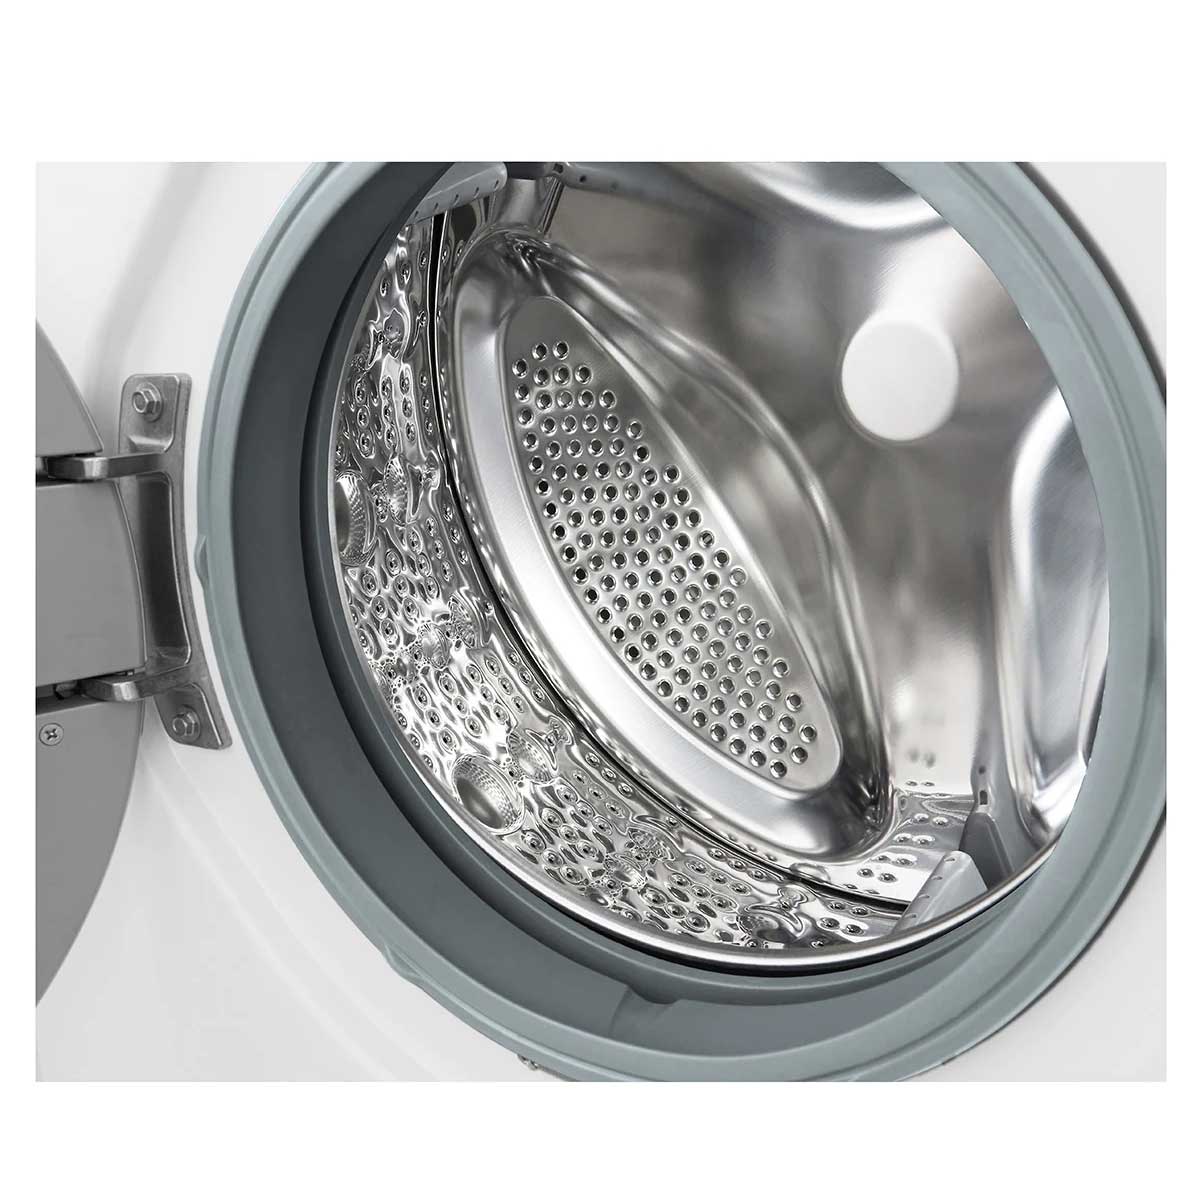 LG 樂金 WF-T1207KW 7.0公斤 1200轉 纖薄前置式洗衣機 (可飛頂) - ShineCreation 創暉百貨